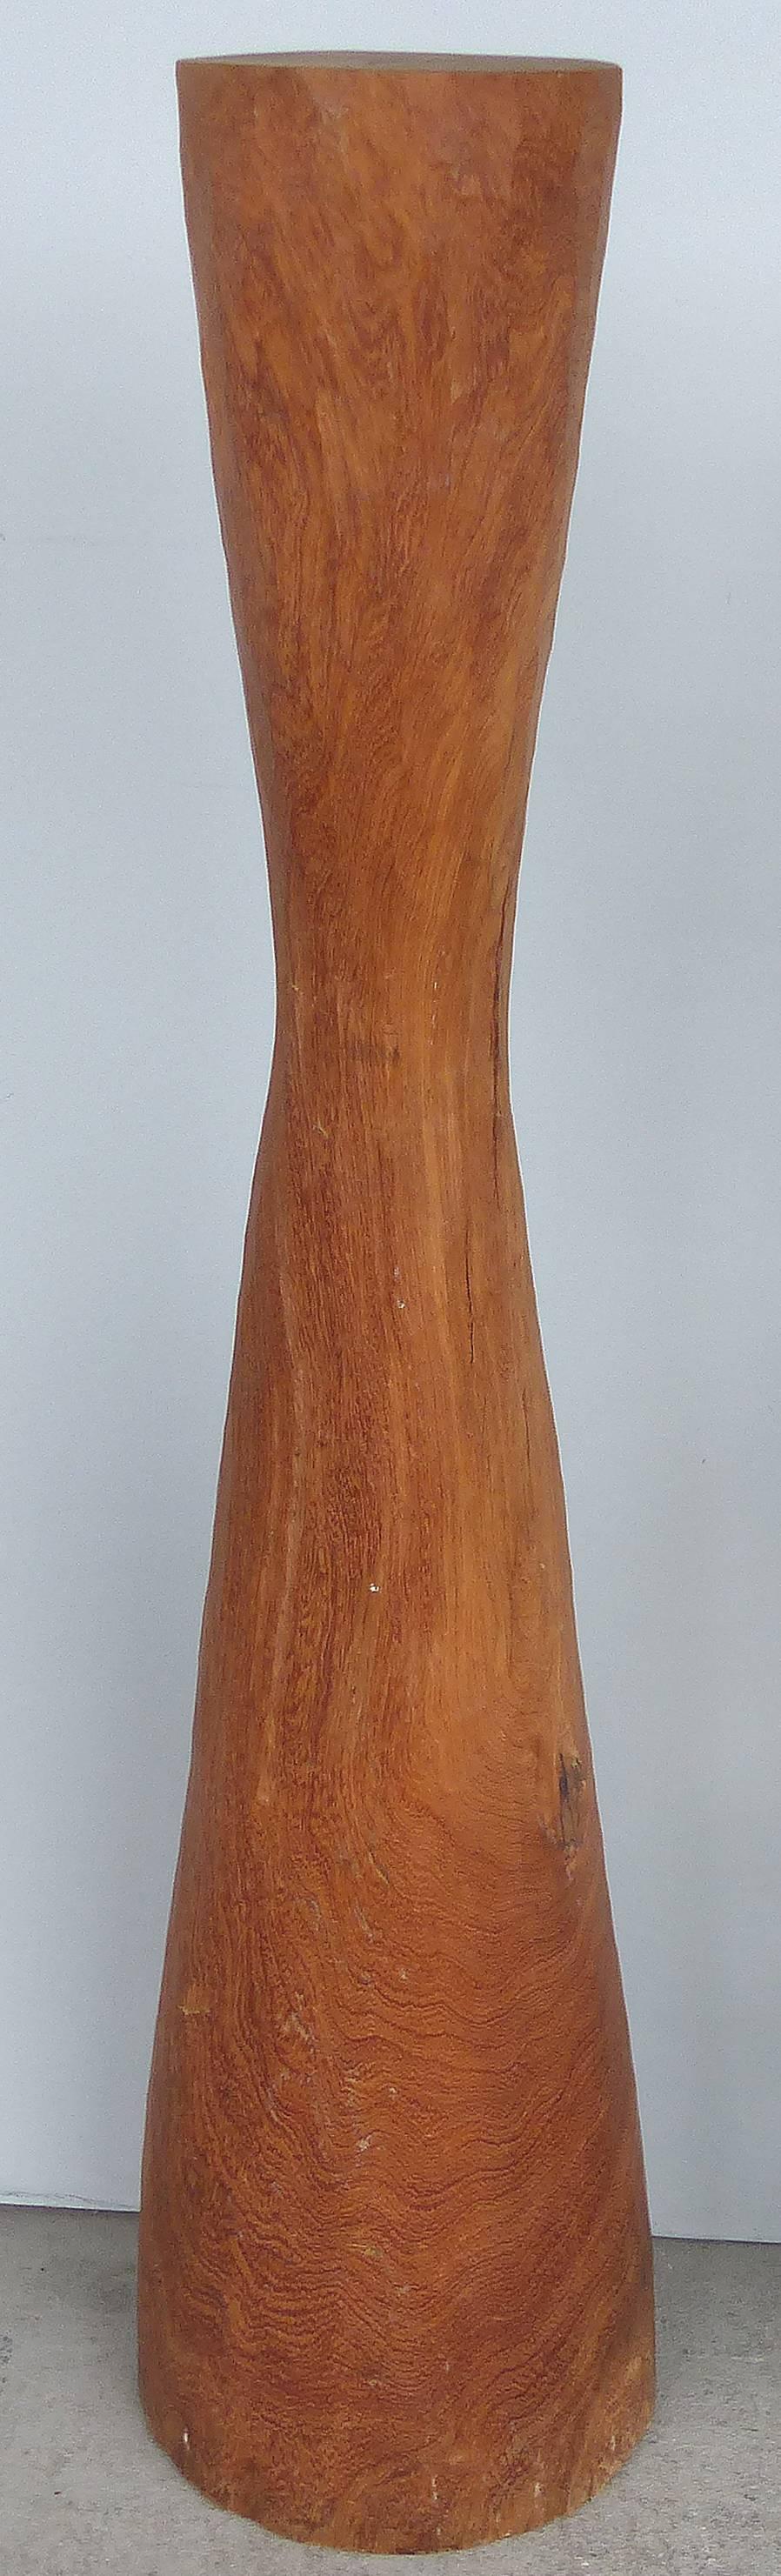 Organic Modern Sculptural Carved Wood Columns 5